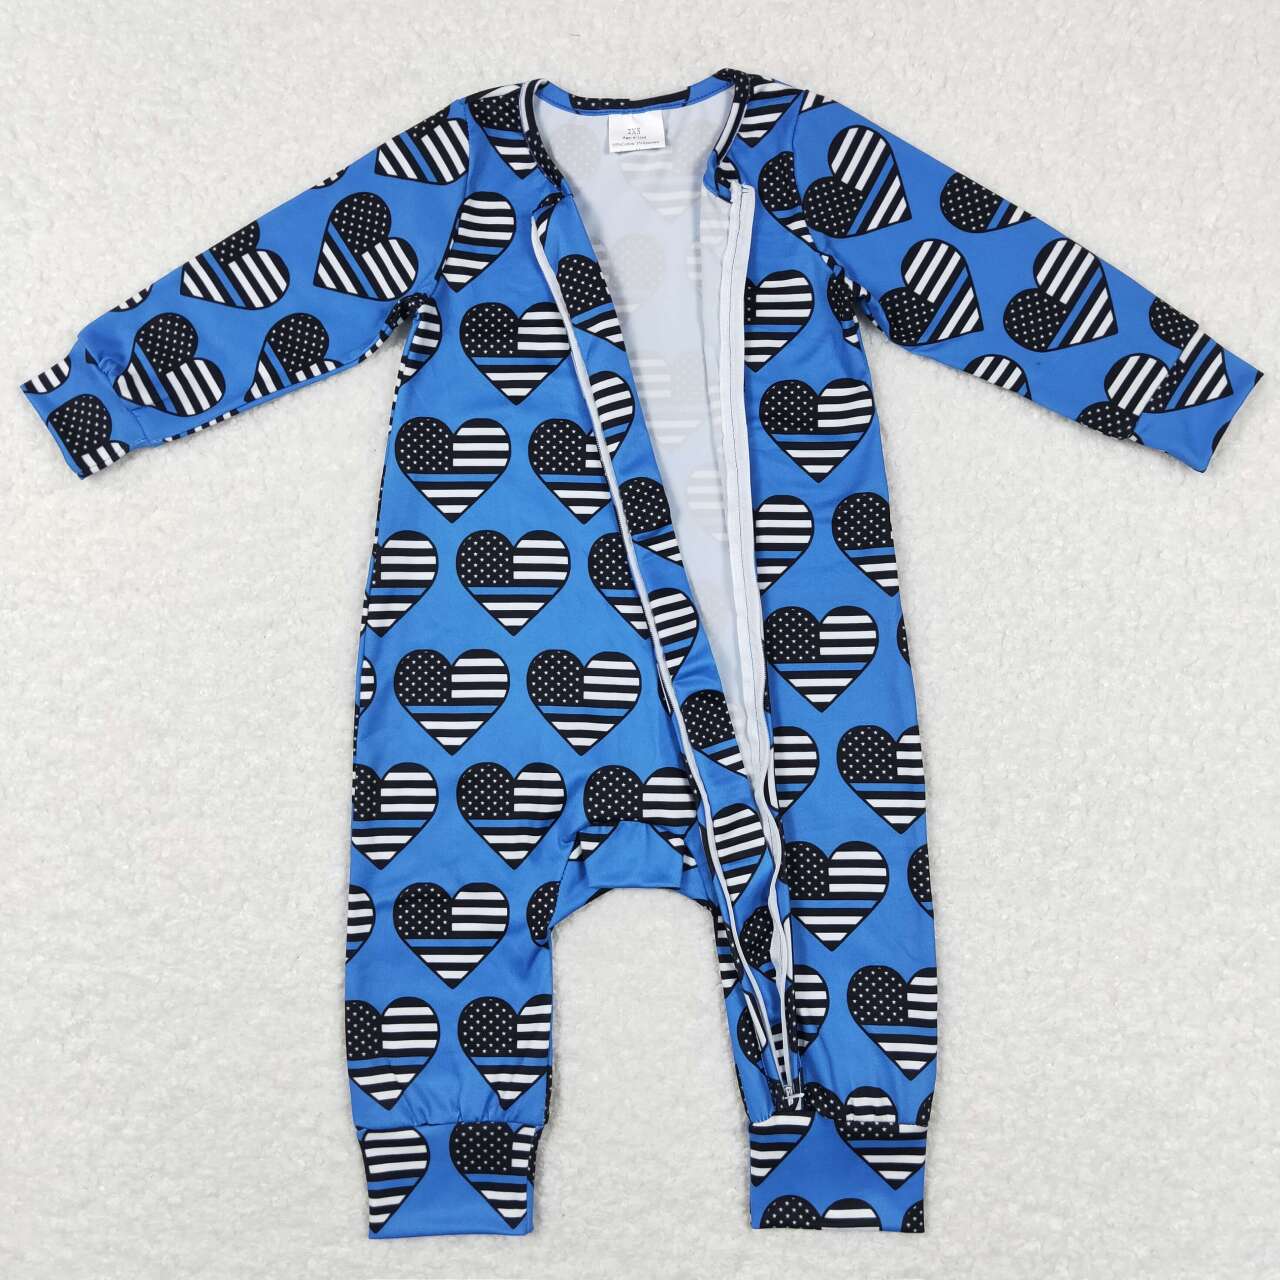 LR0850 baby boy clothes blue police zipper  boy winer romper